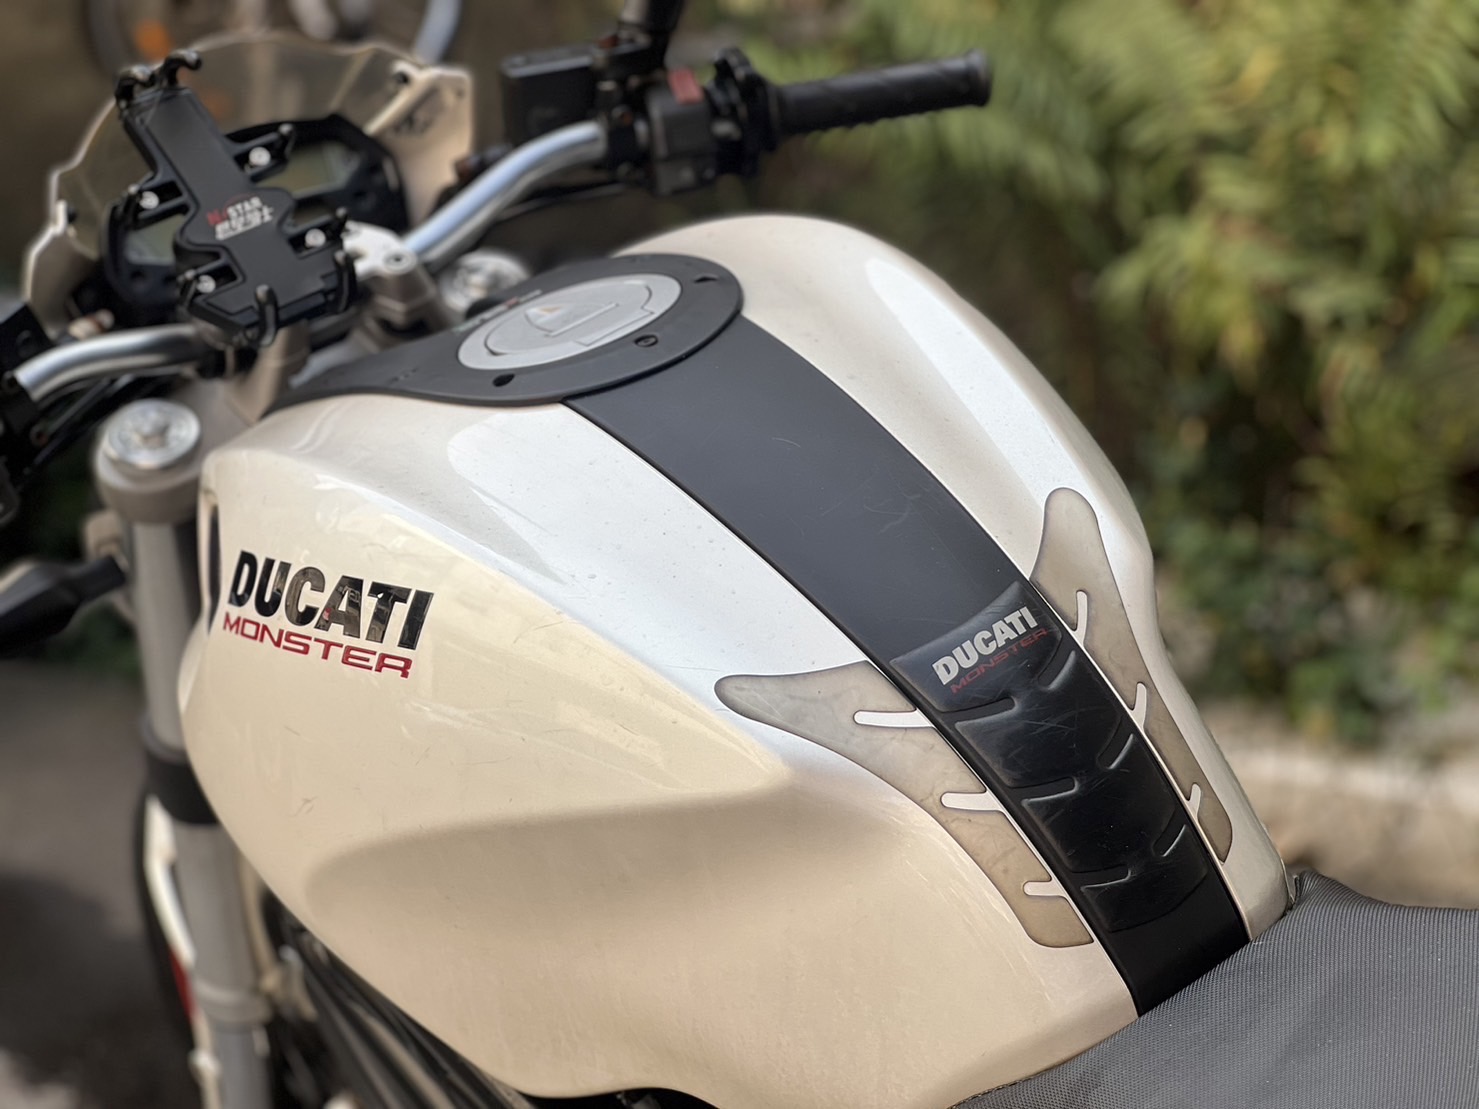 DUCATI MONSTER696 - 中古/二手車出售中 Ducati Monster 696 可分期 可換車 歡迎詢問 line:@q0984380388 | 個人自售